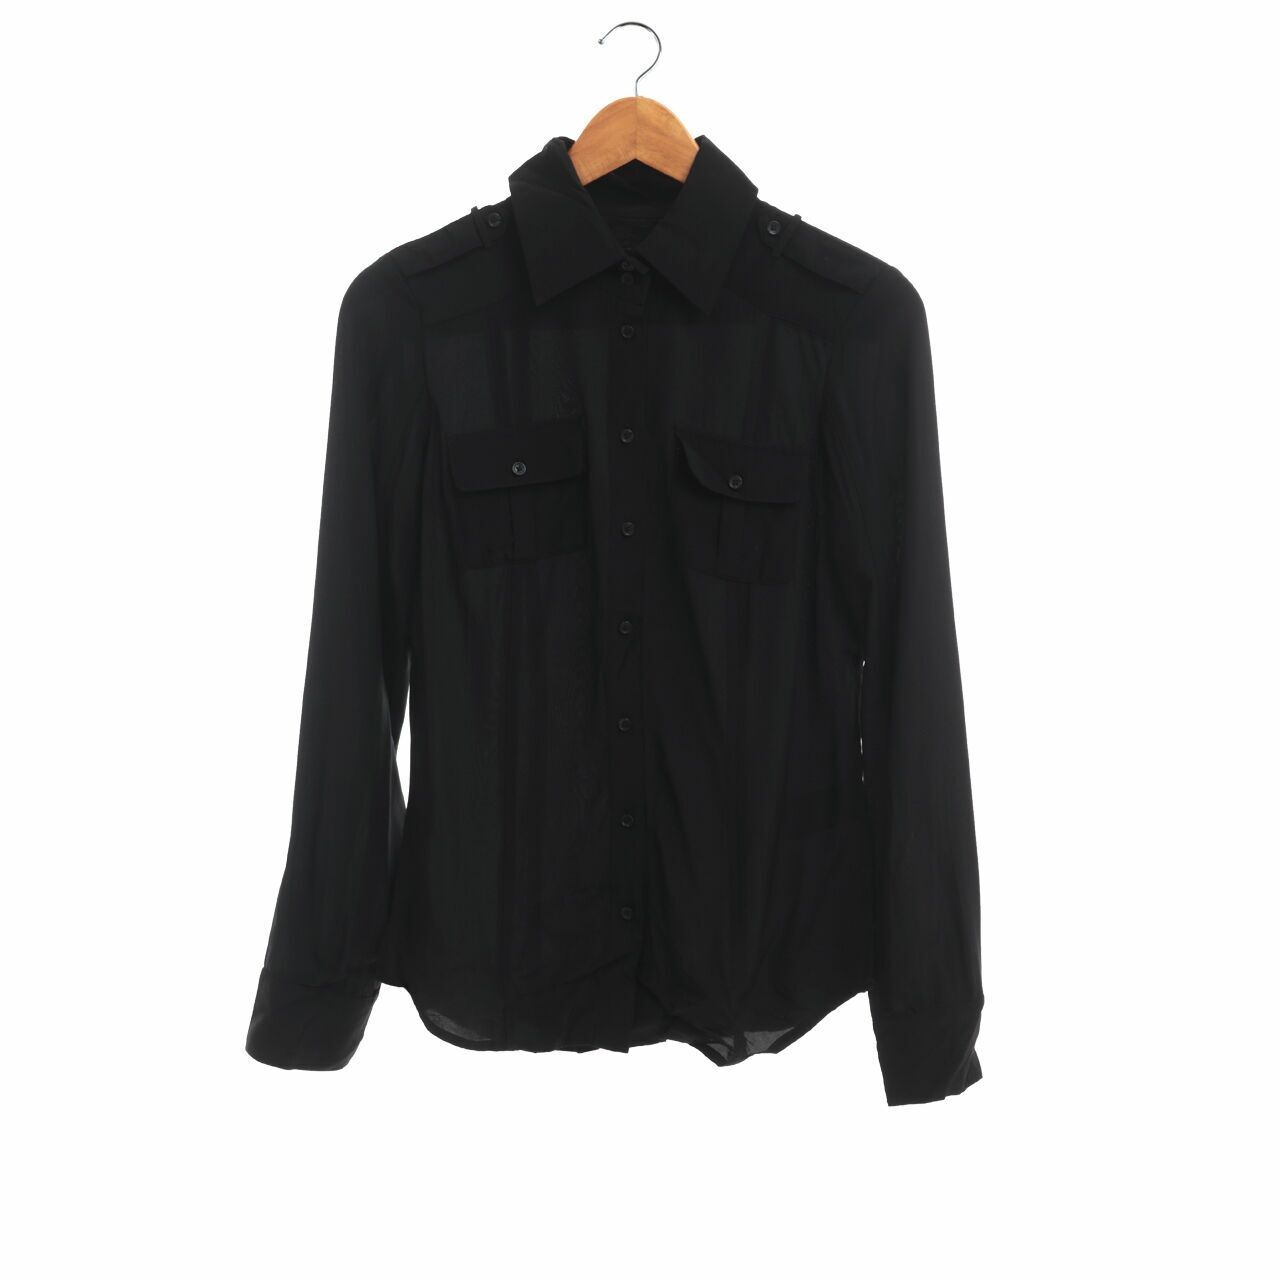 Reiss Black Shirt